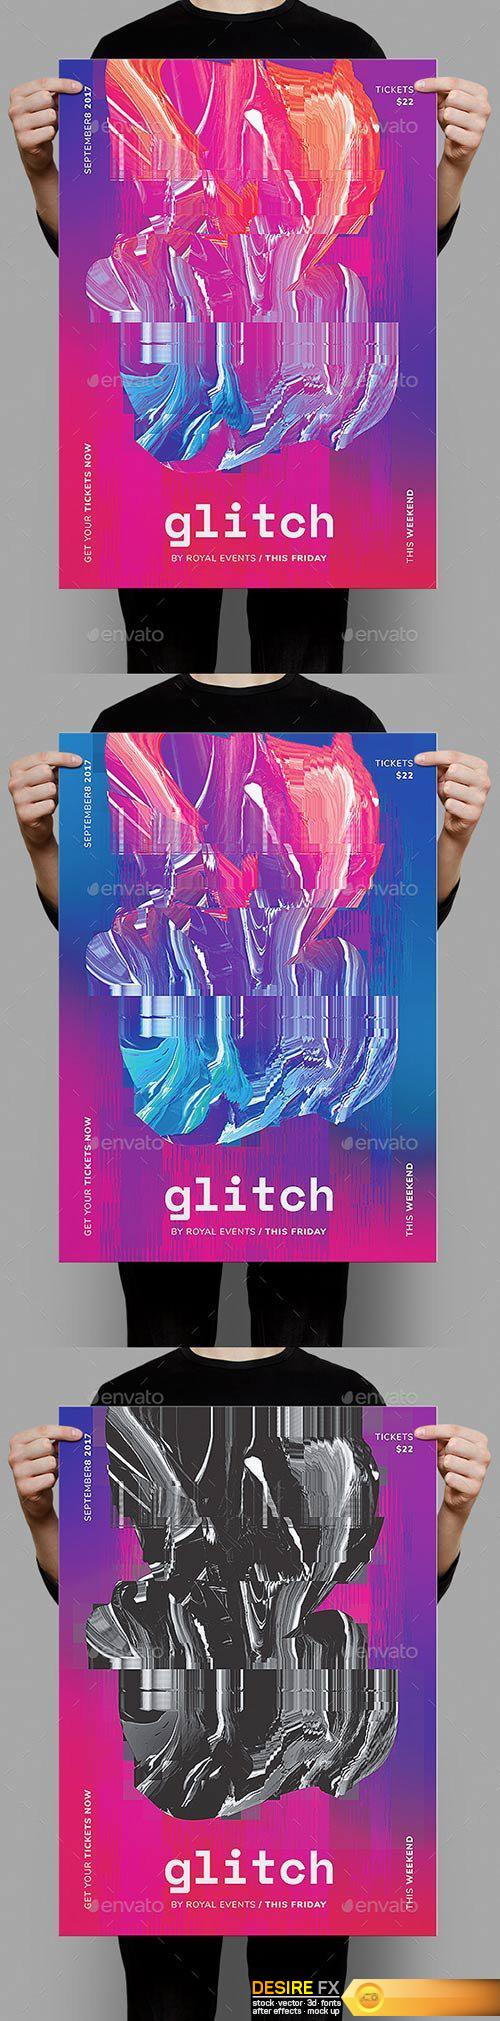 Graphicriver - Glitch Poster / Flyer Template 20612619